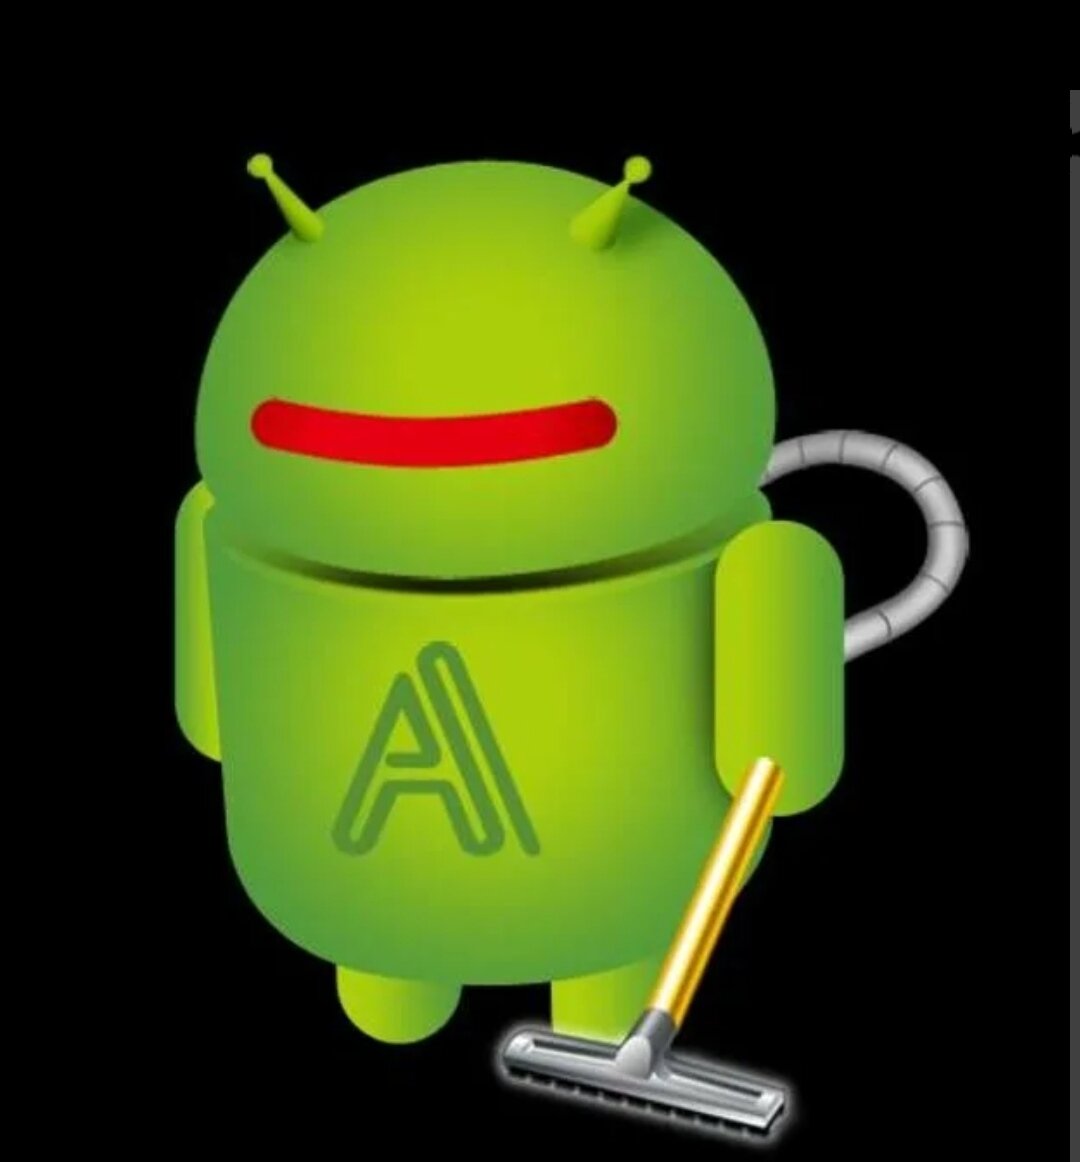 Автоматическая очистка андроид. Android Cleaner. Андроид чистый Android. Маленький андроид. Очистка андроид картинки.